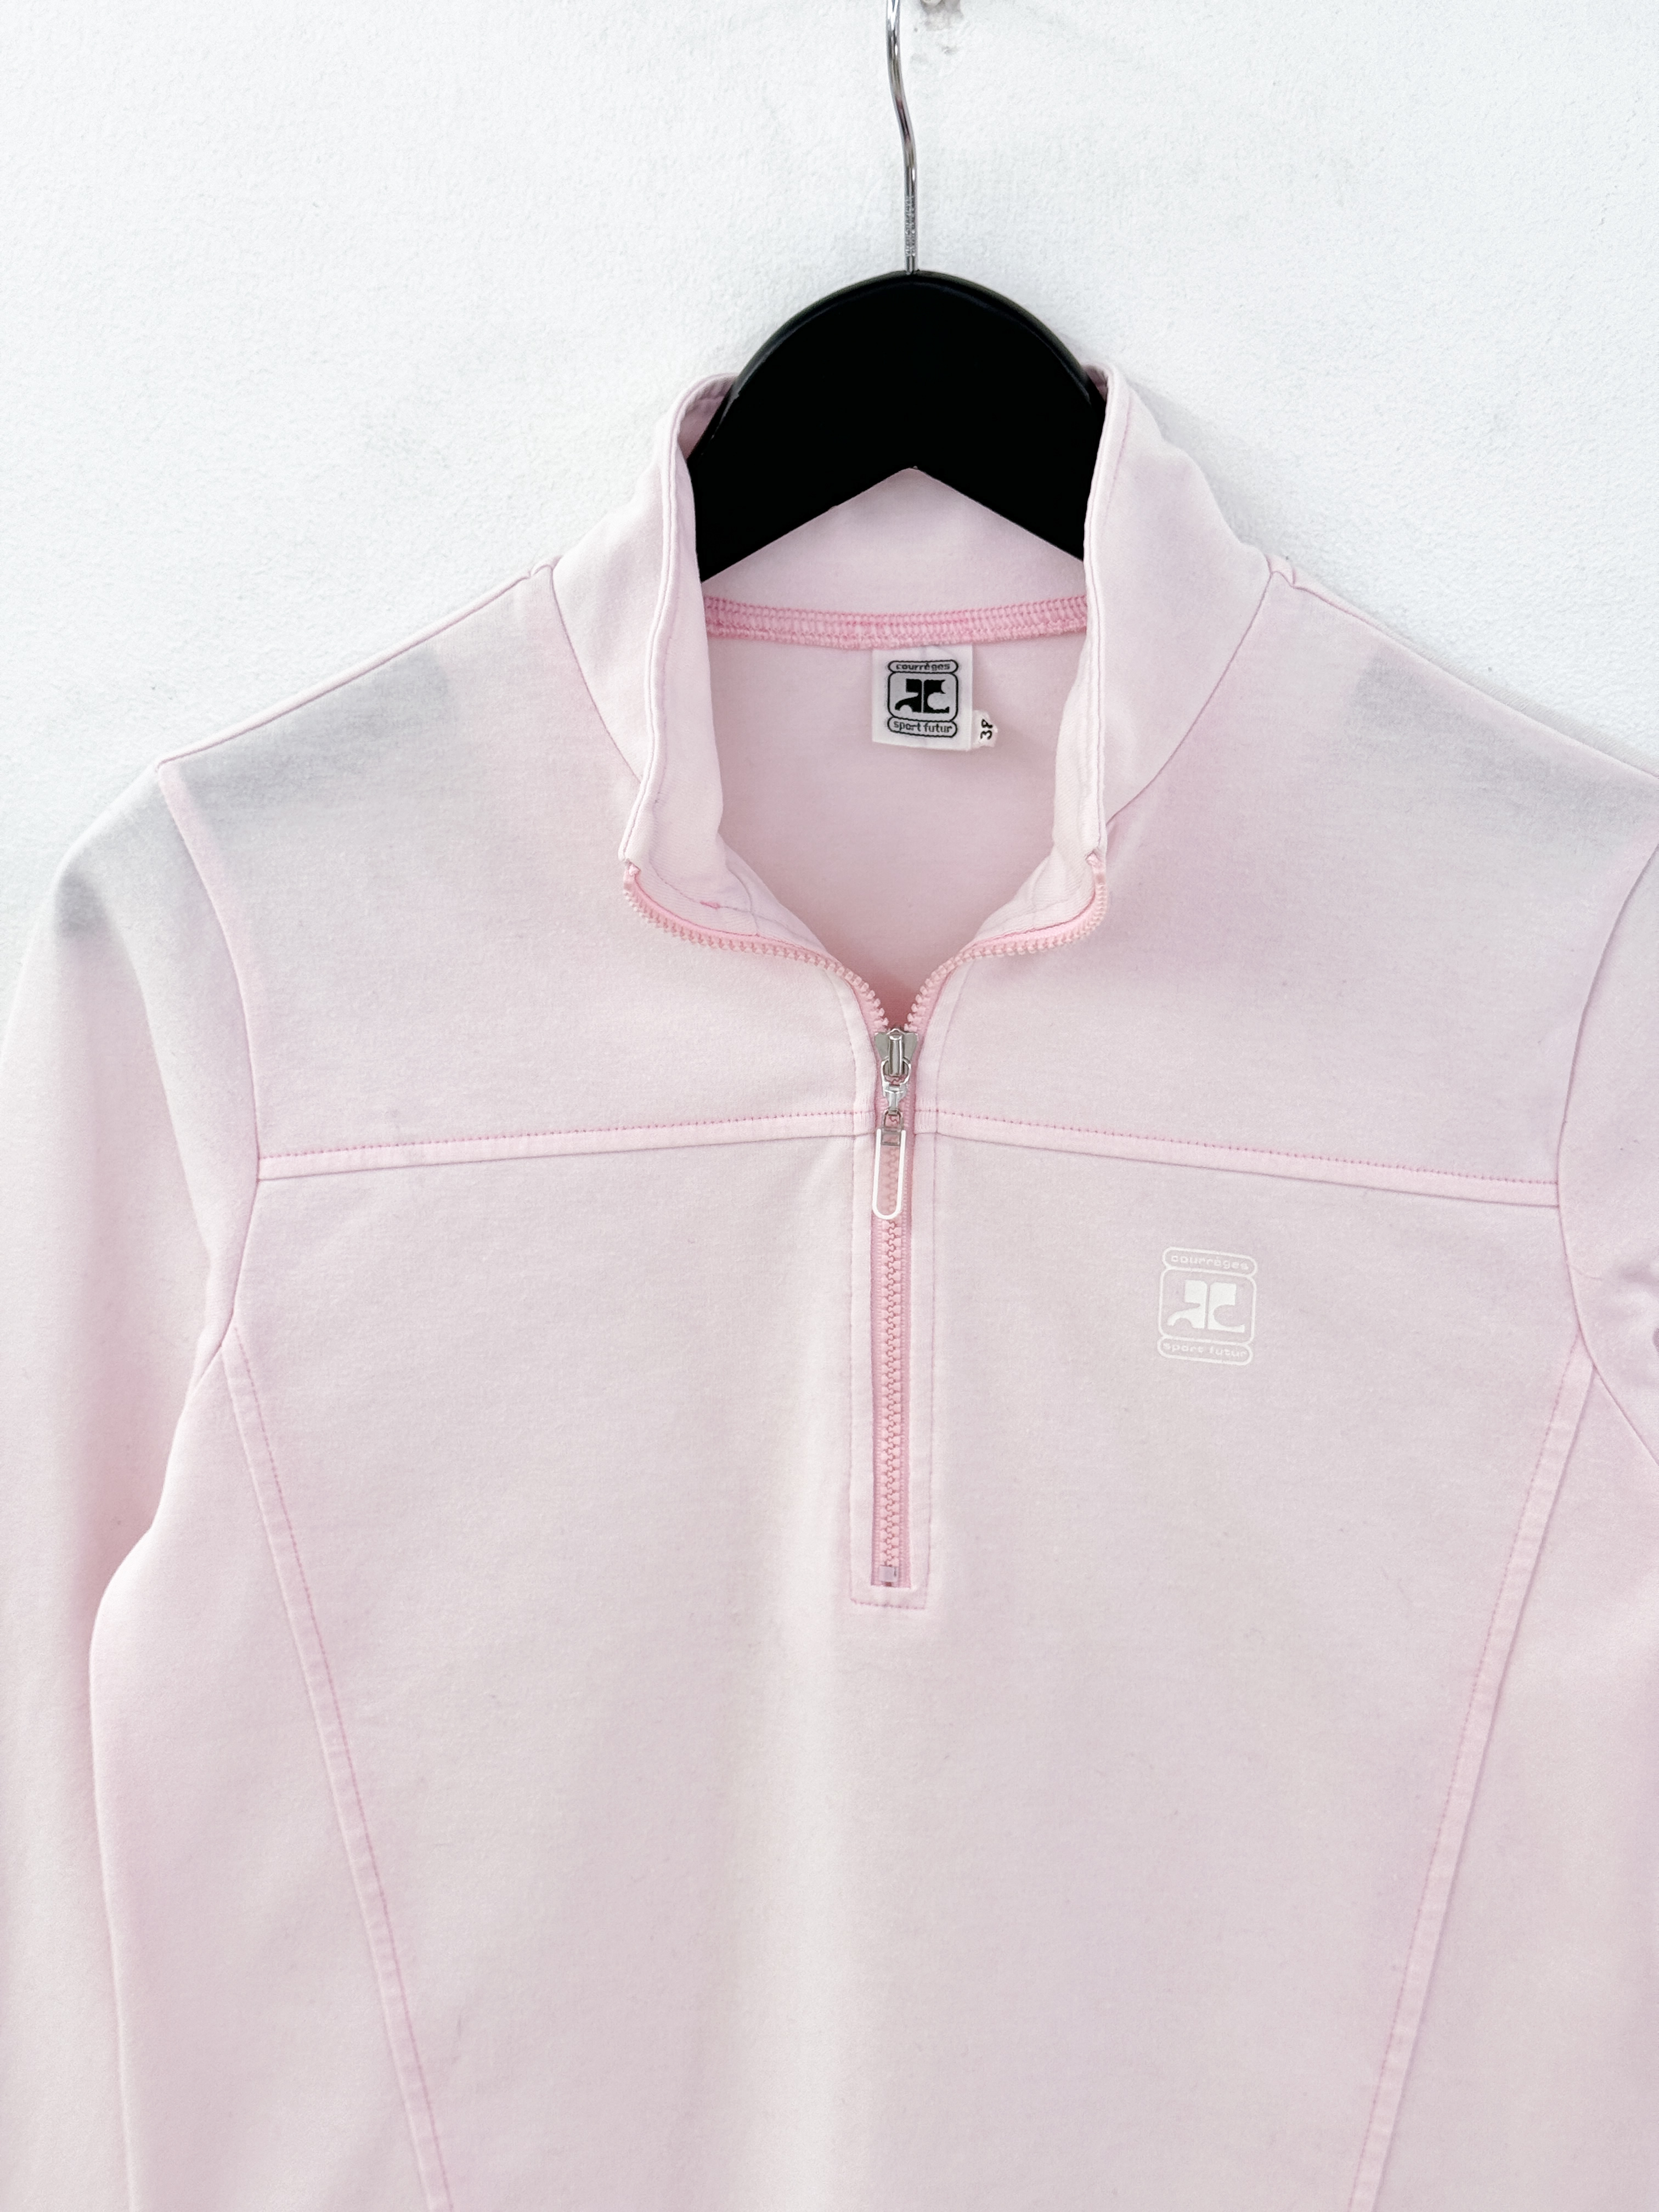 courreges pink zip up shirts